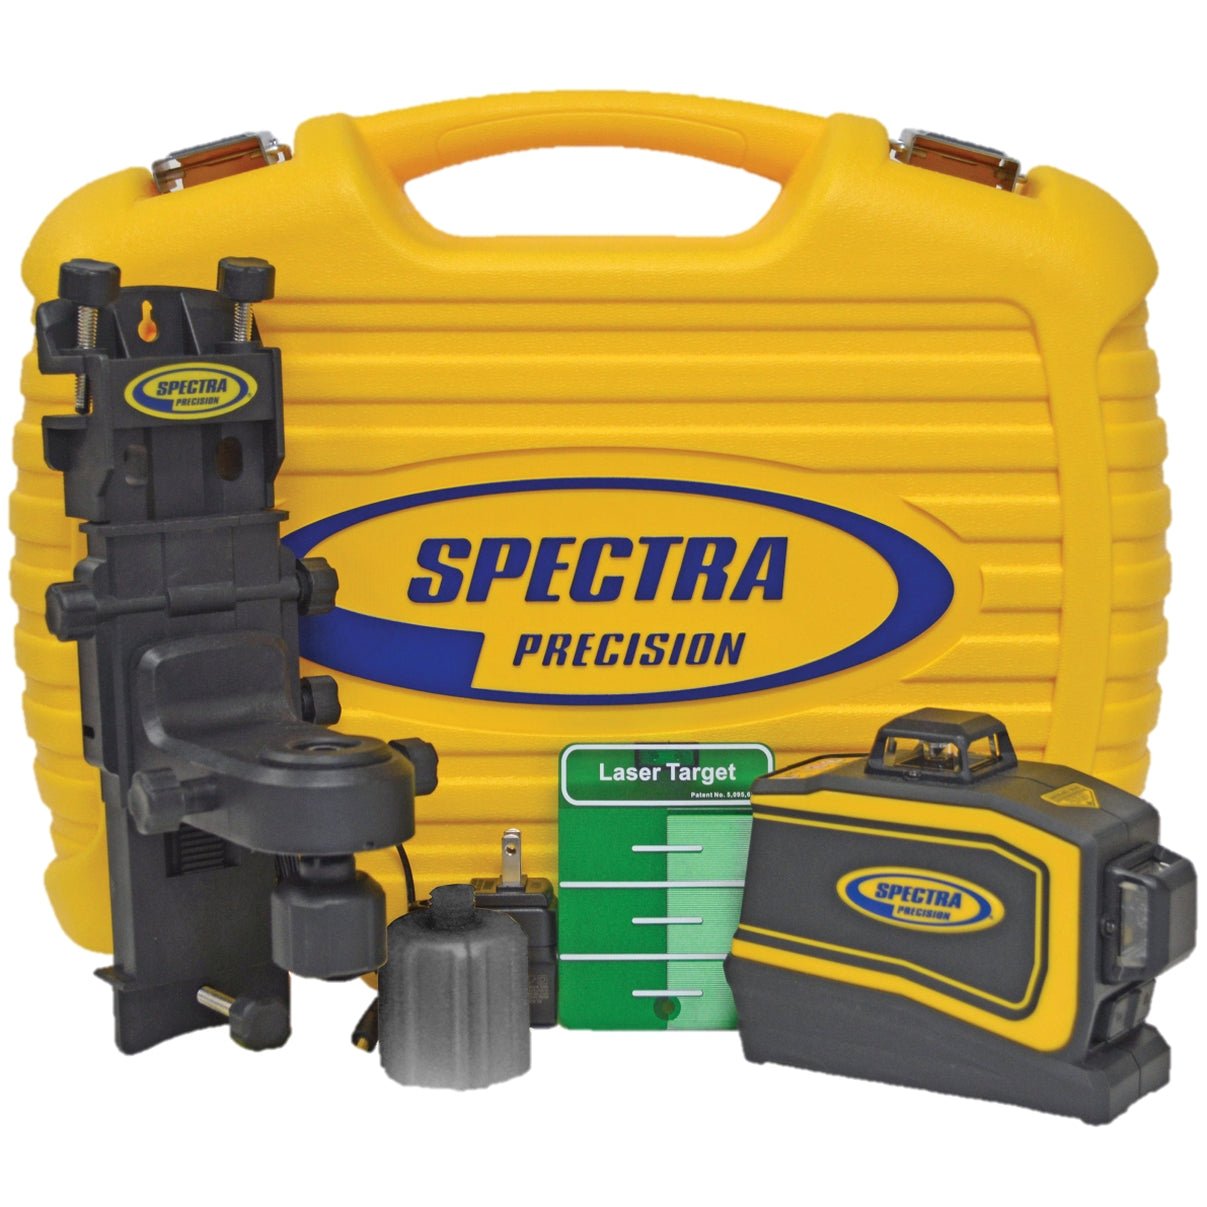 Spectra LT58G -  Spectra 3/360 Gr. Beam Layout Laser Tool